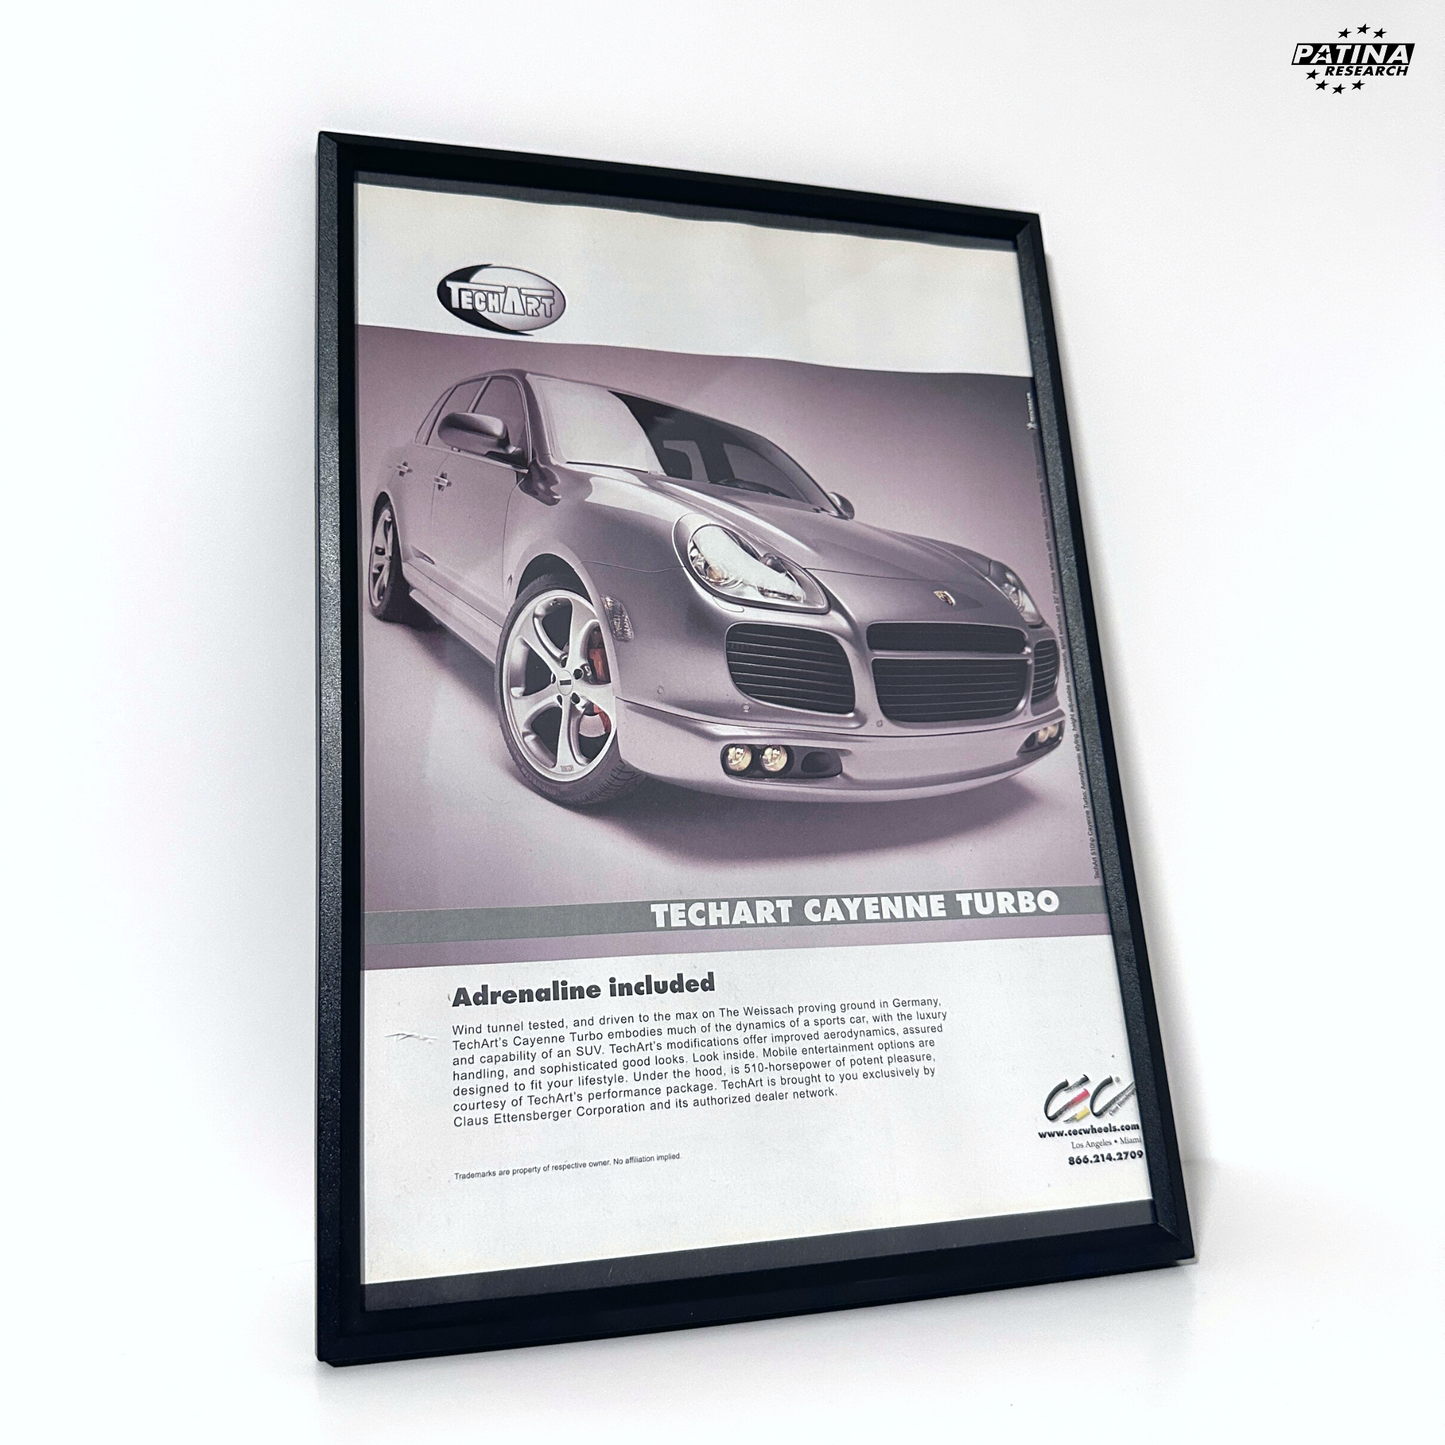 Porsche Techart cayenne turbo framed ad